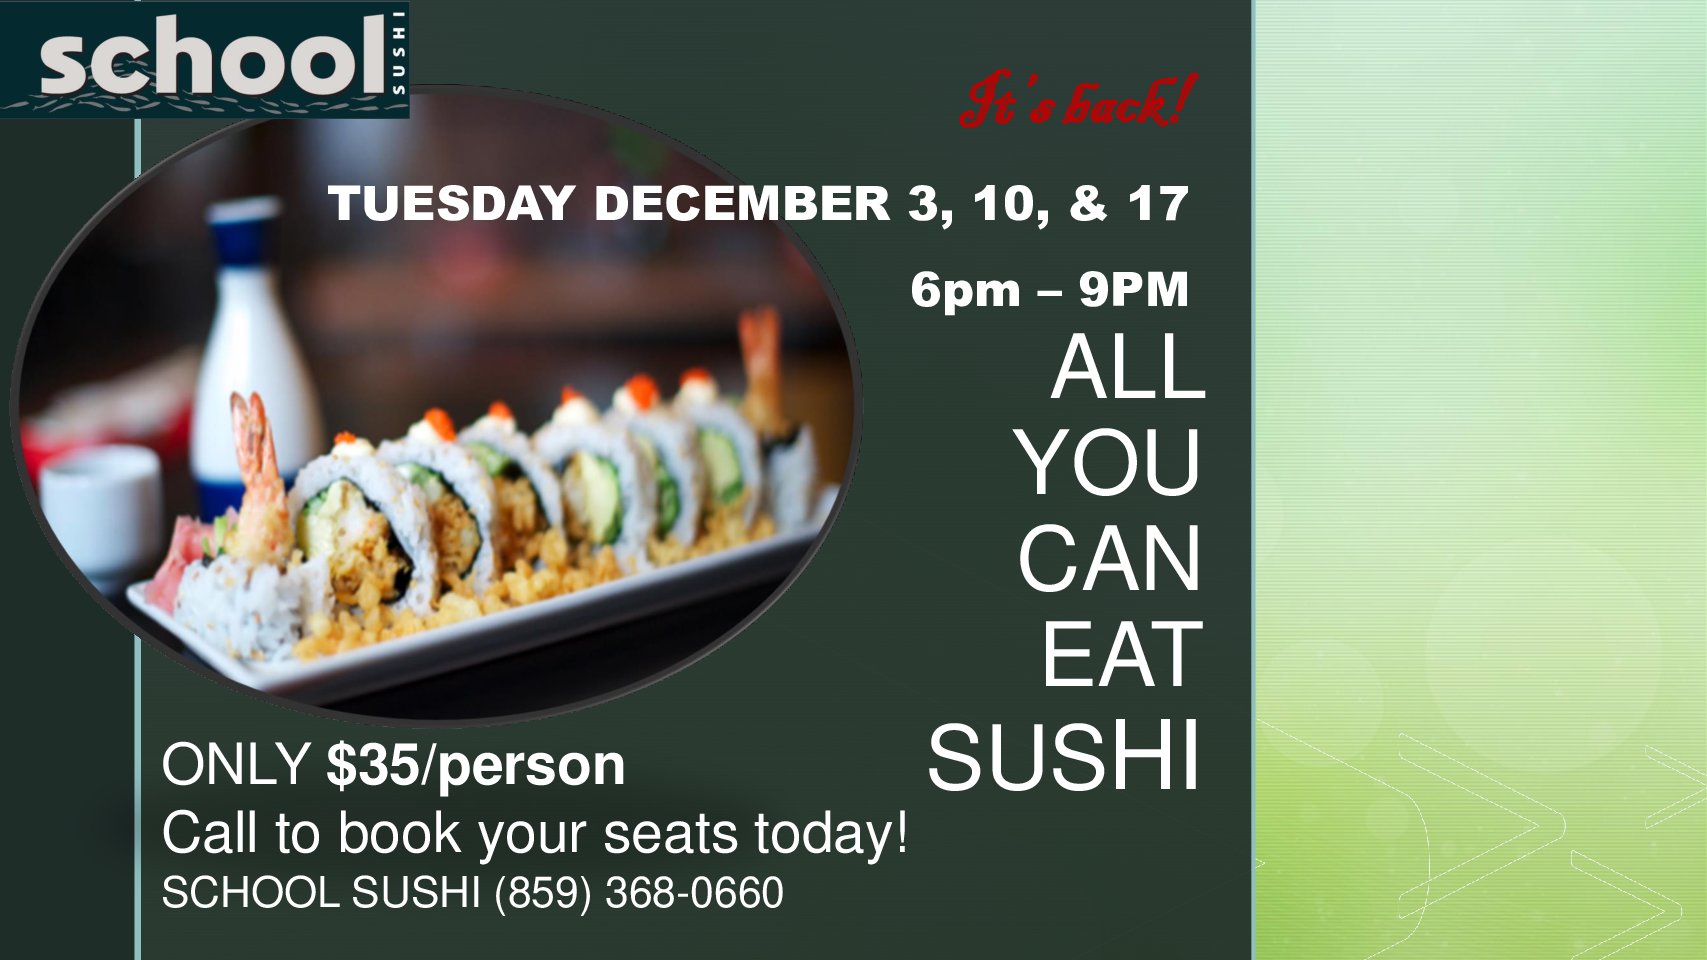 School Sushi: ALL YOU CAN EAT SUSHI